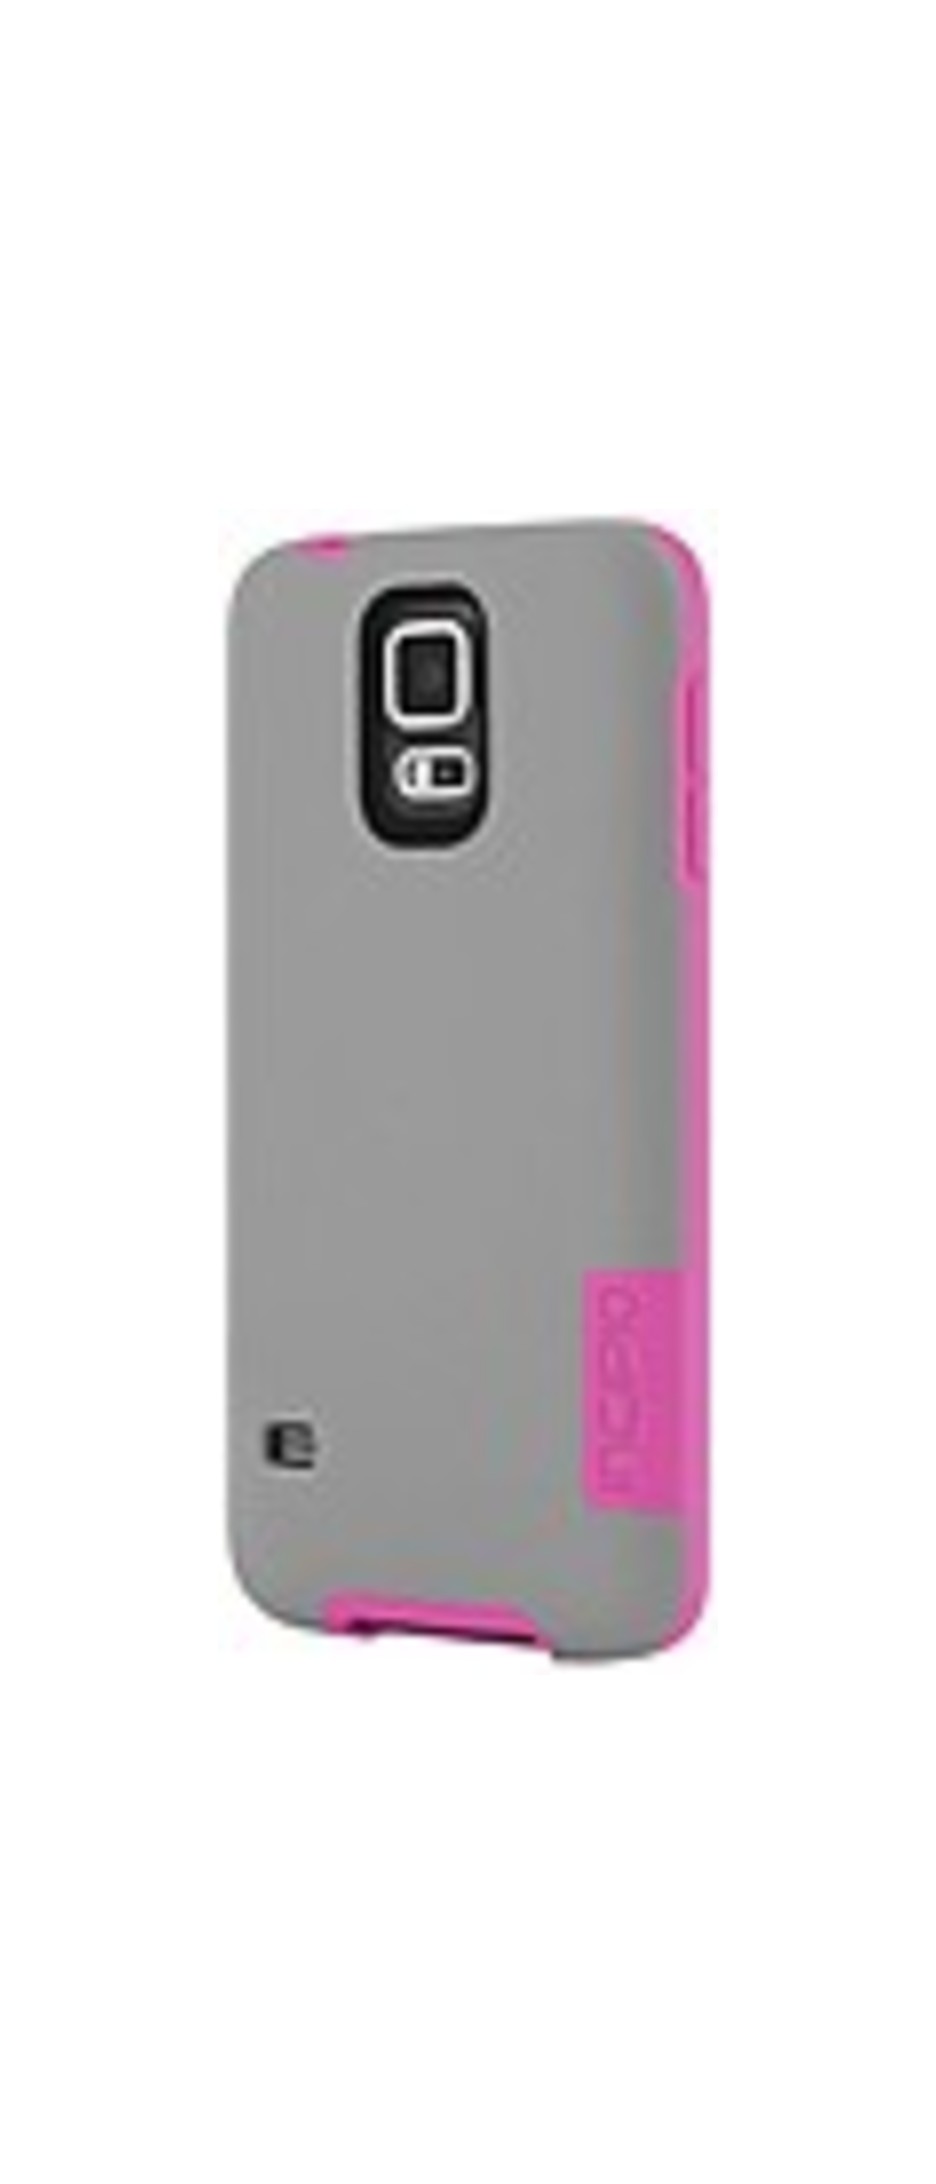 Incipio OVRMLD Case for Samsung Galaxy S5 - Gray/Pink - SA-531-GRY - Flexible Hard-Shell - Plextonium, Next Generation Polymer